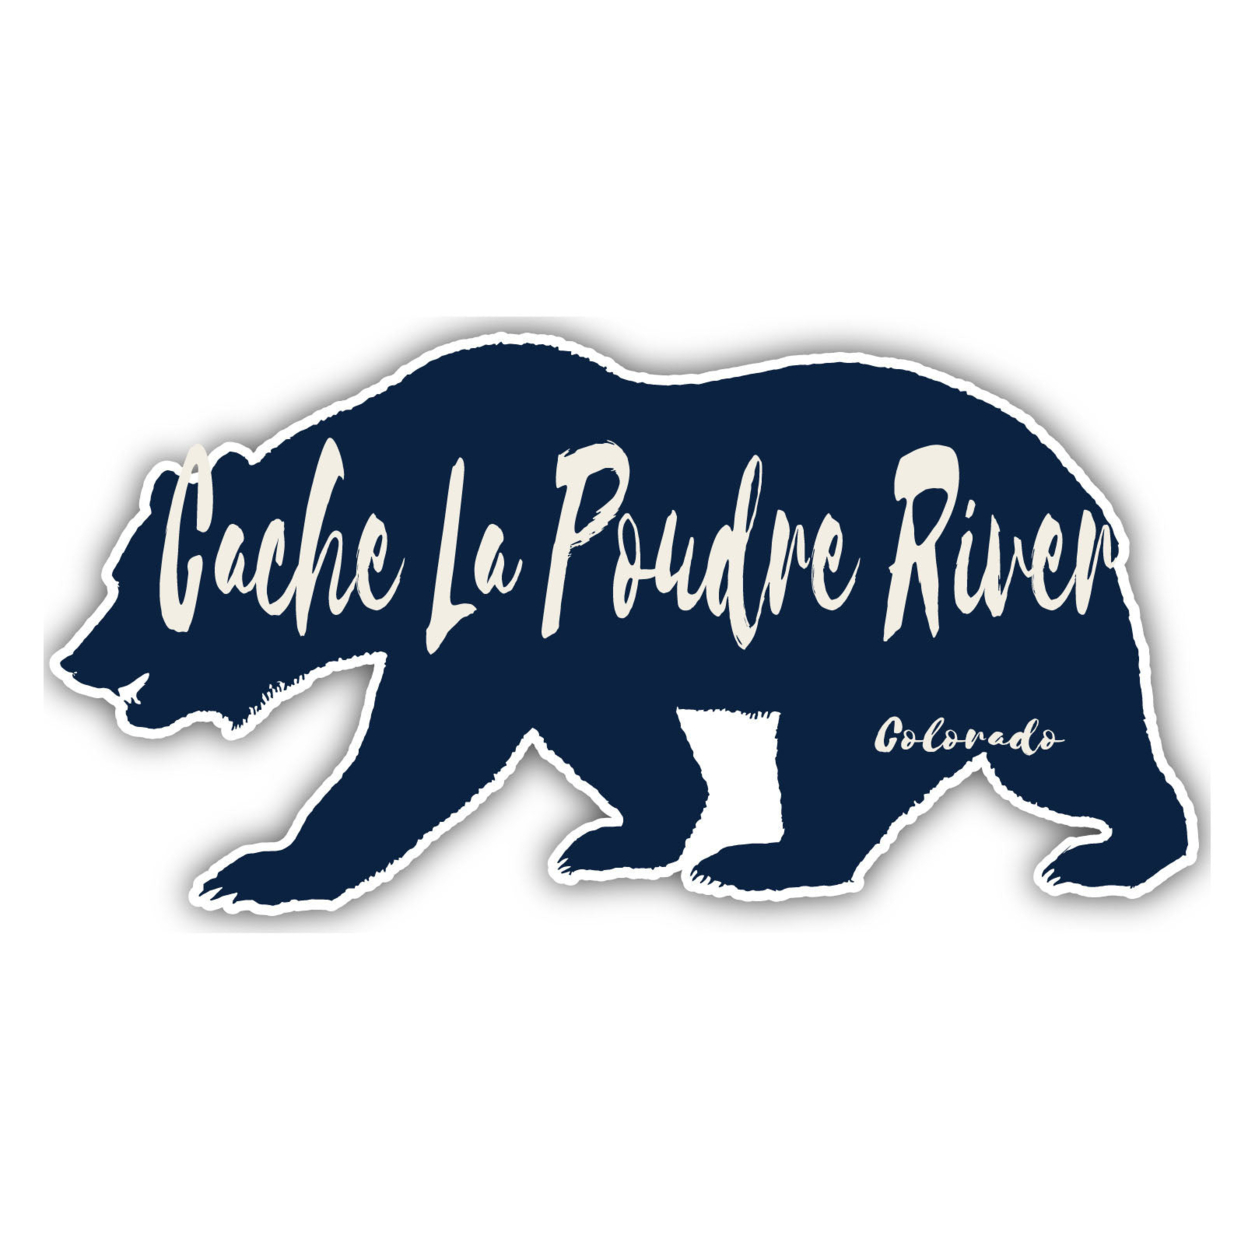 Cache La Poudre River Colorado Souvenir Decorative Stickers (Choose Theme And Size) - Single Unit, 8-Inch, Bear